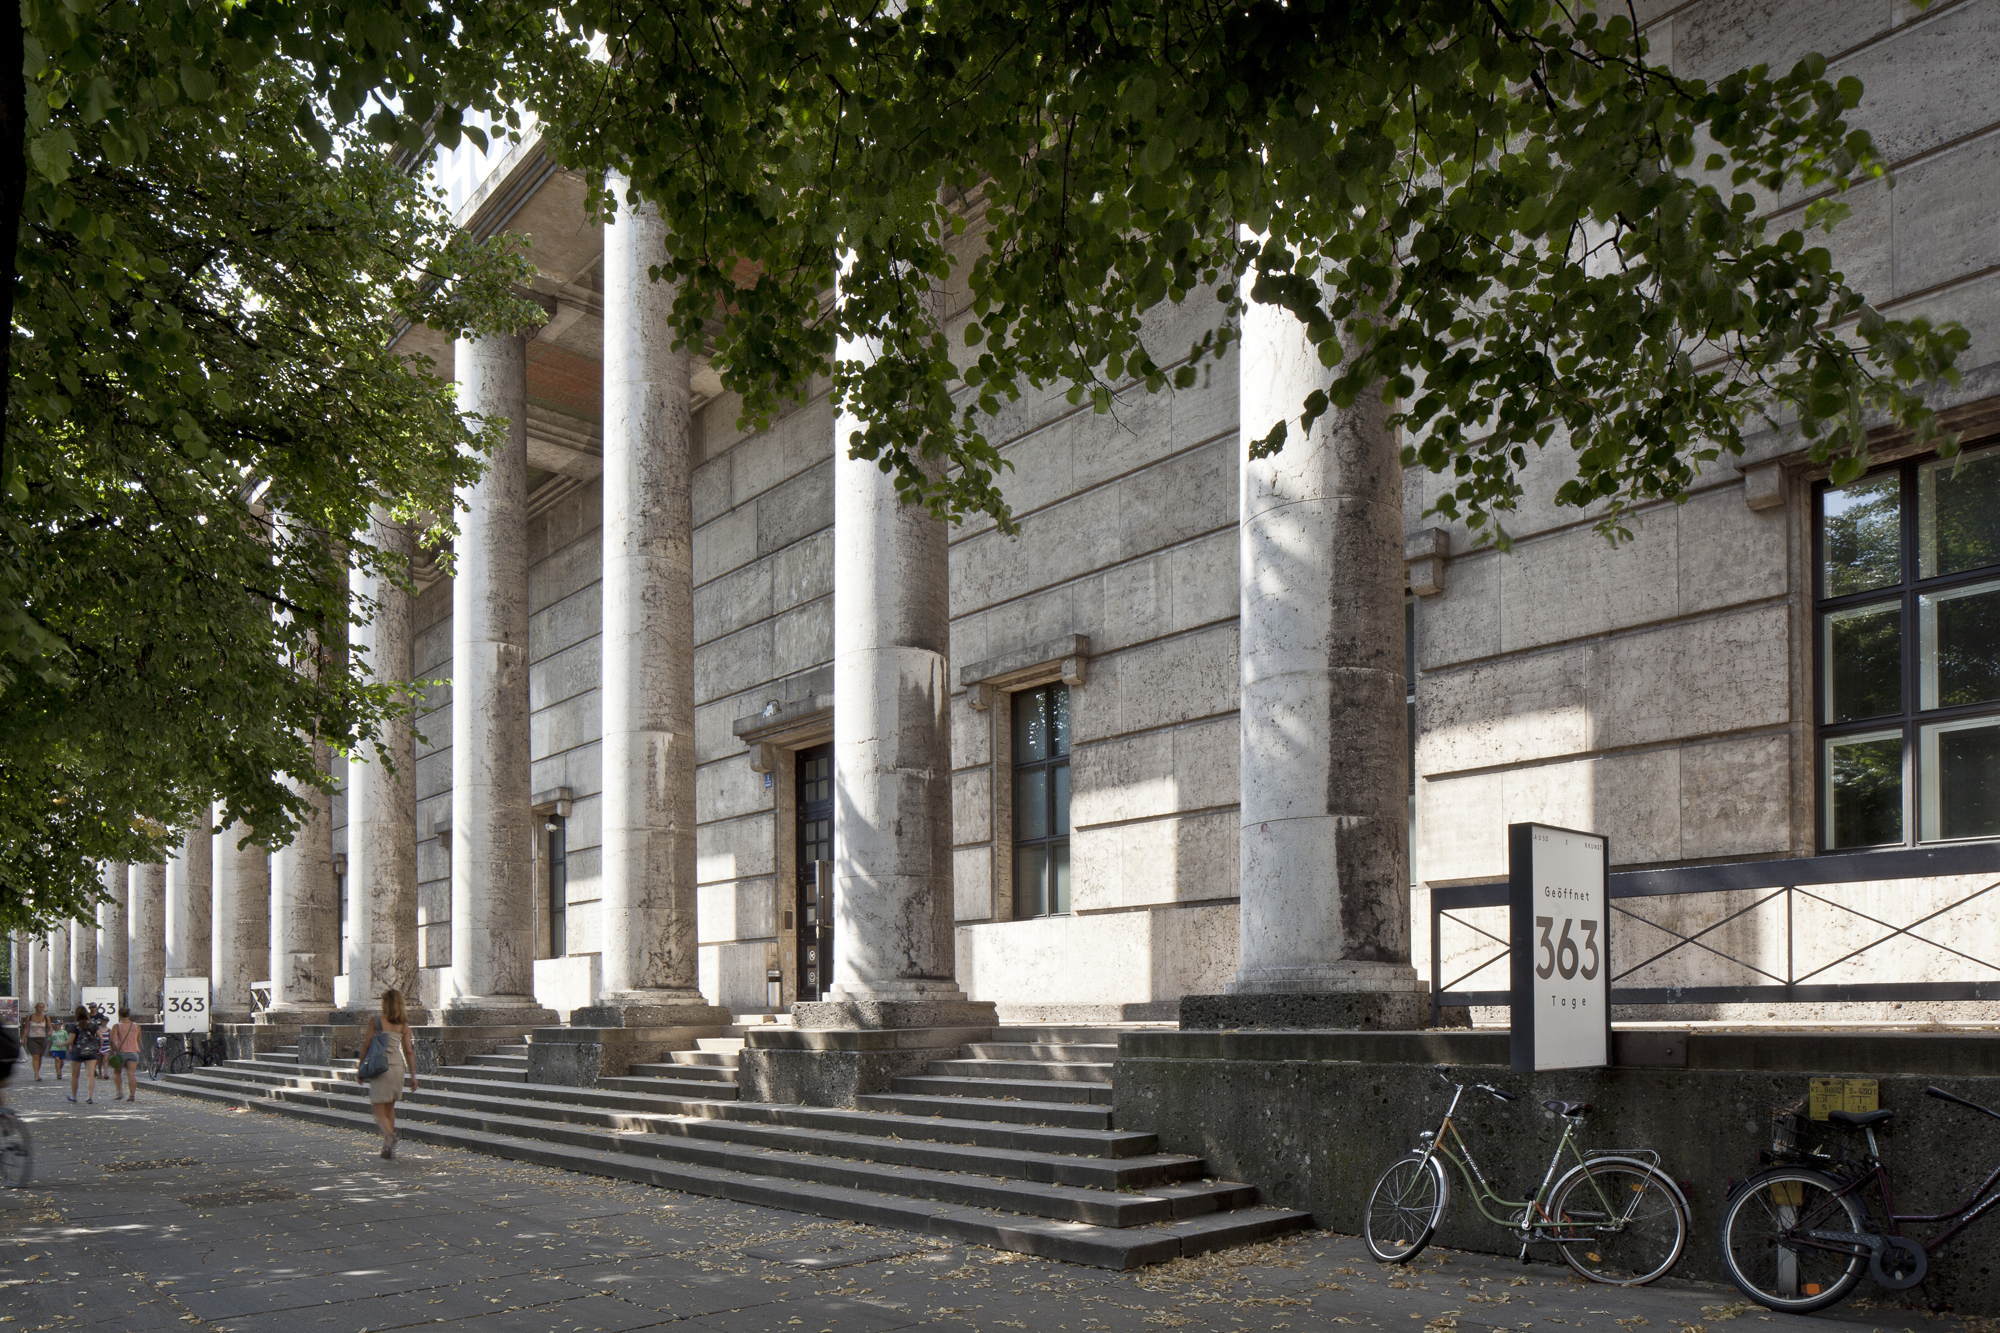 Haus der Kunst by David Chipperfield Architects, first